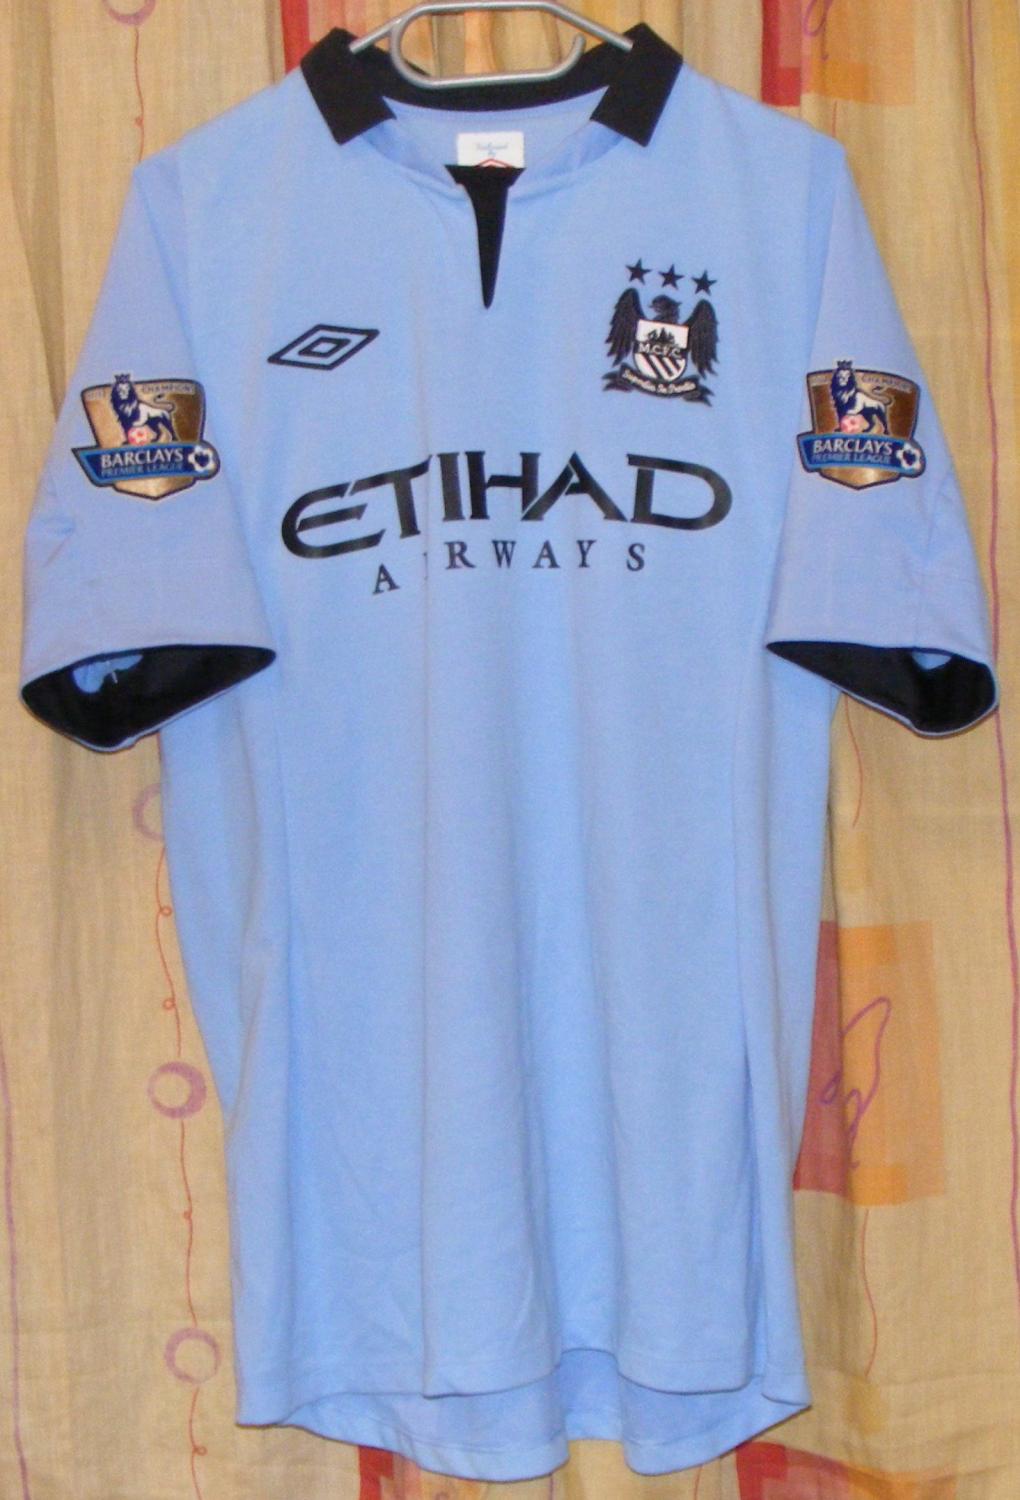 Zielig Snazzy Gearceerd Manchester City Home football shirt 2012 - 2013. Sponsored by Etihad